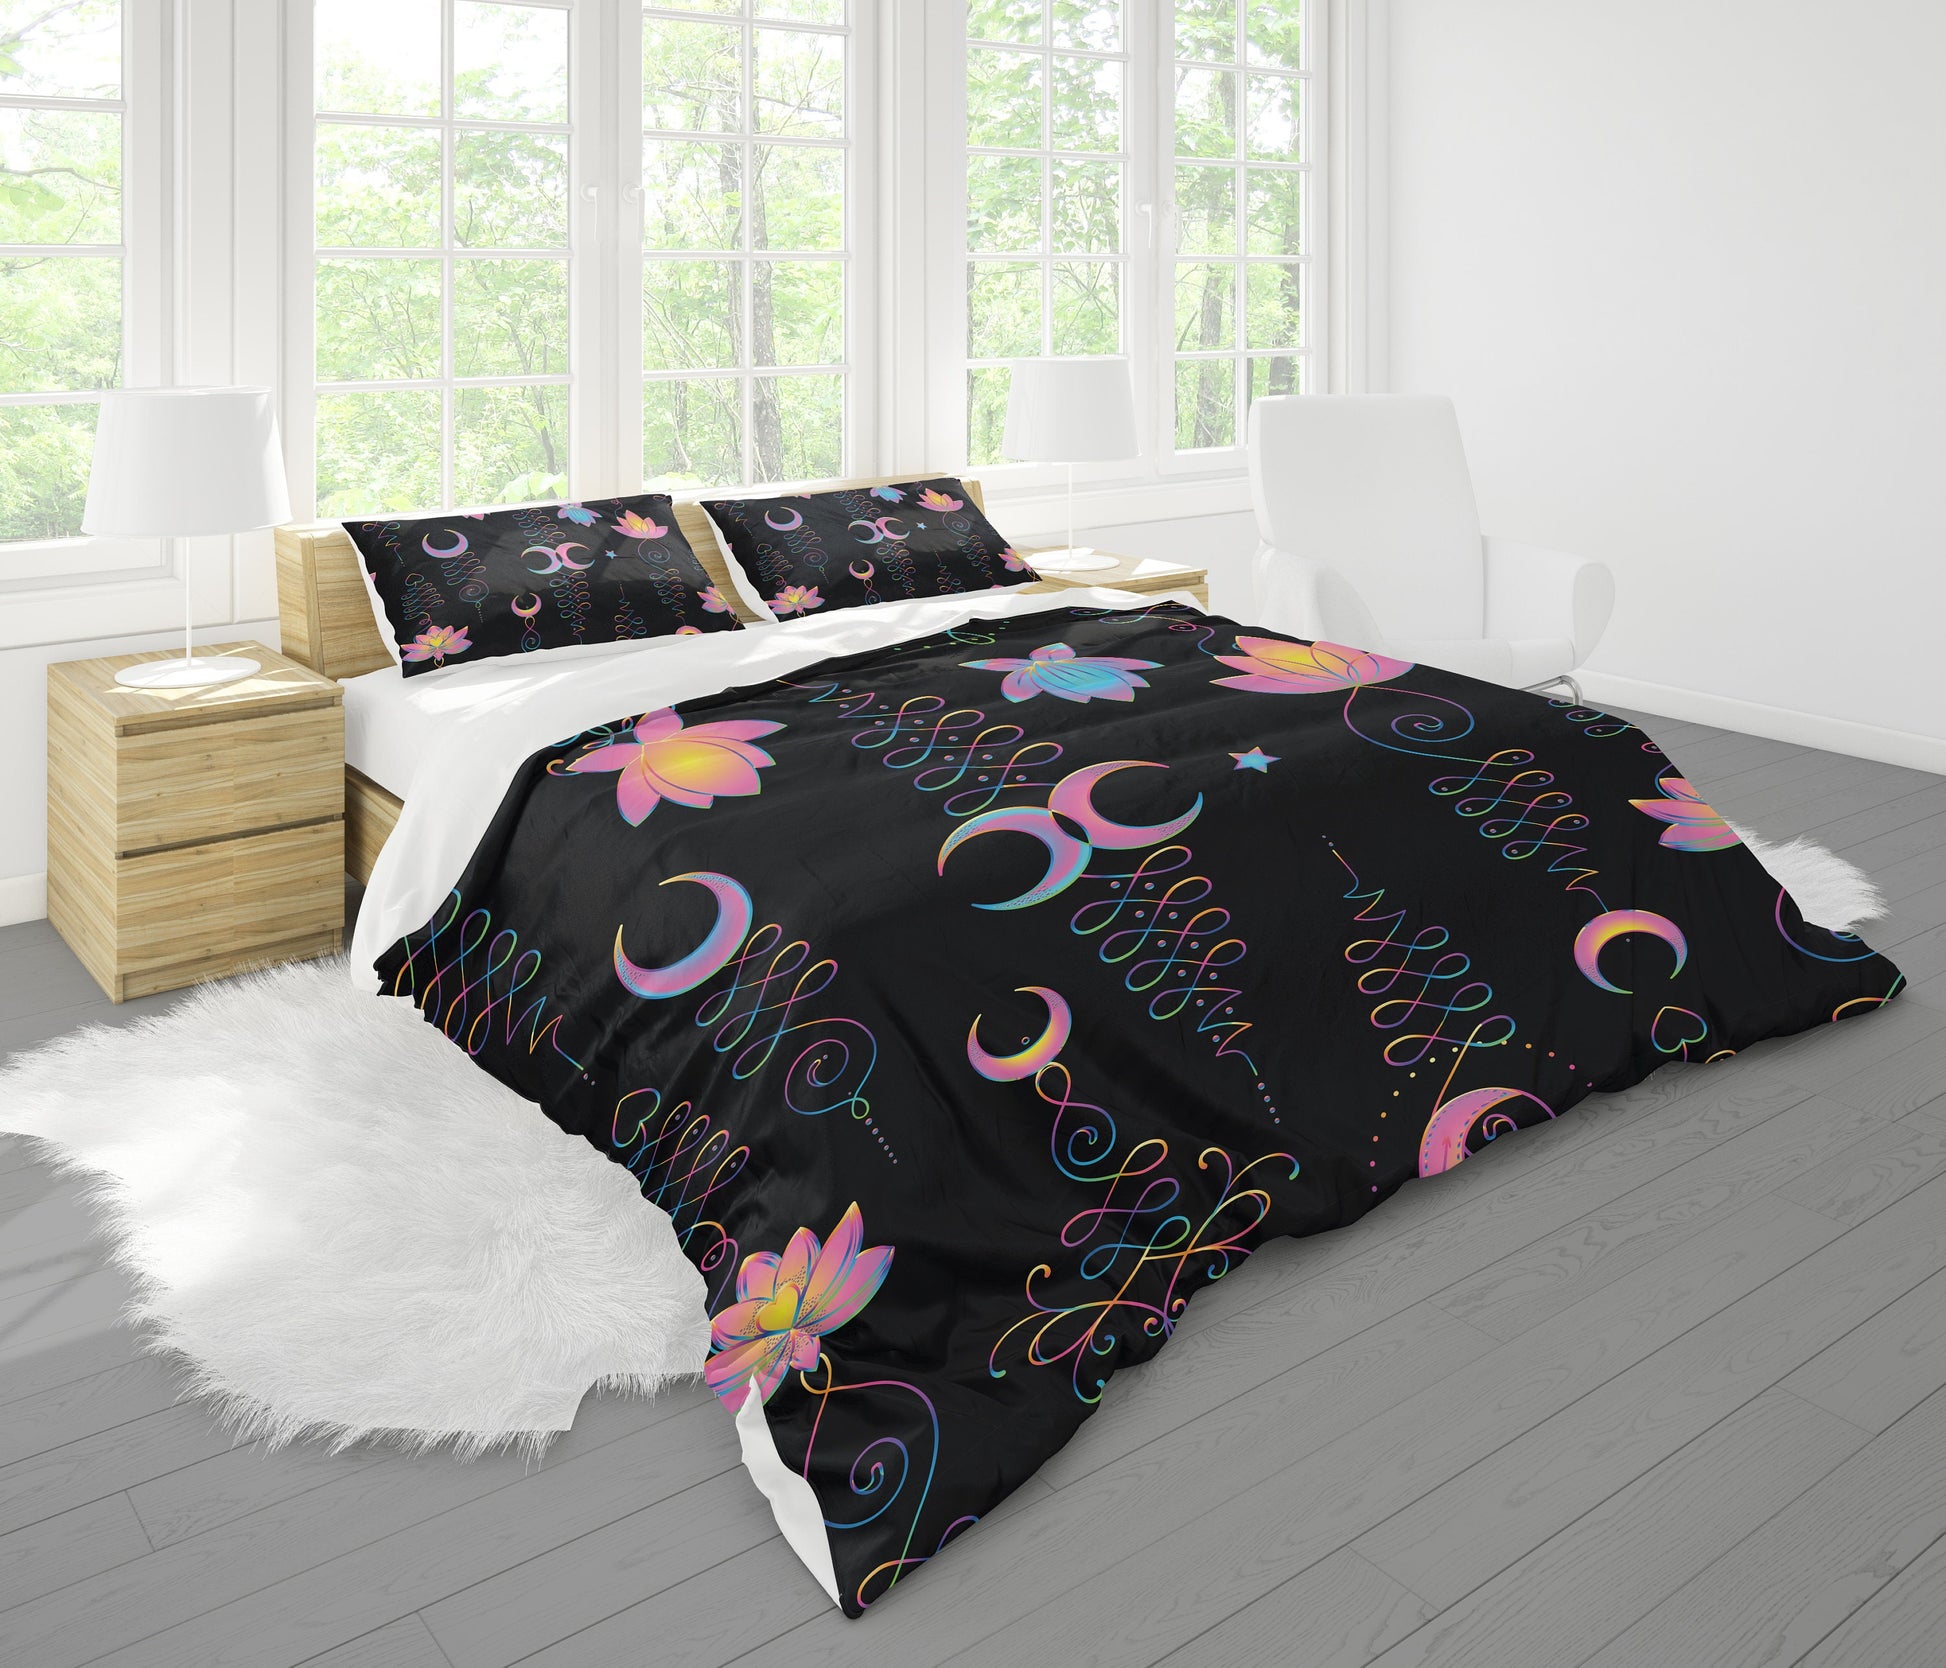 Lotus Moon Unalome Sacred Geometry Comforter or Duvet Cover spiritual bedding flower bedding lotus comforters